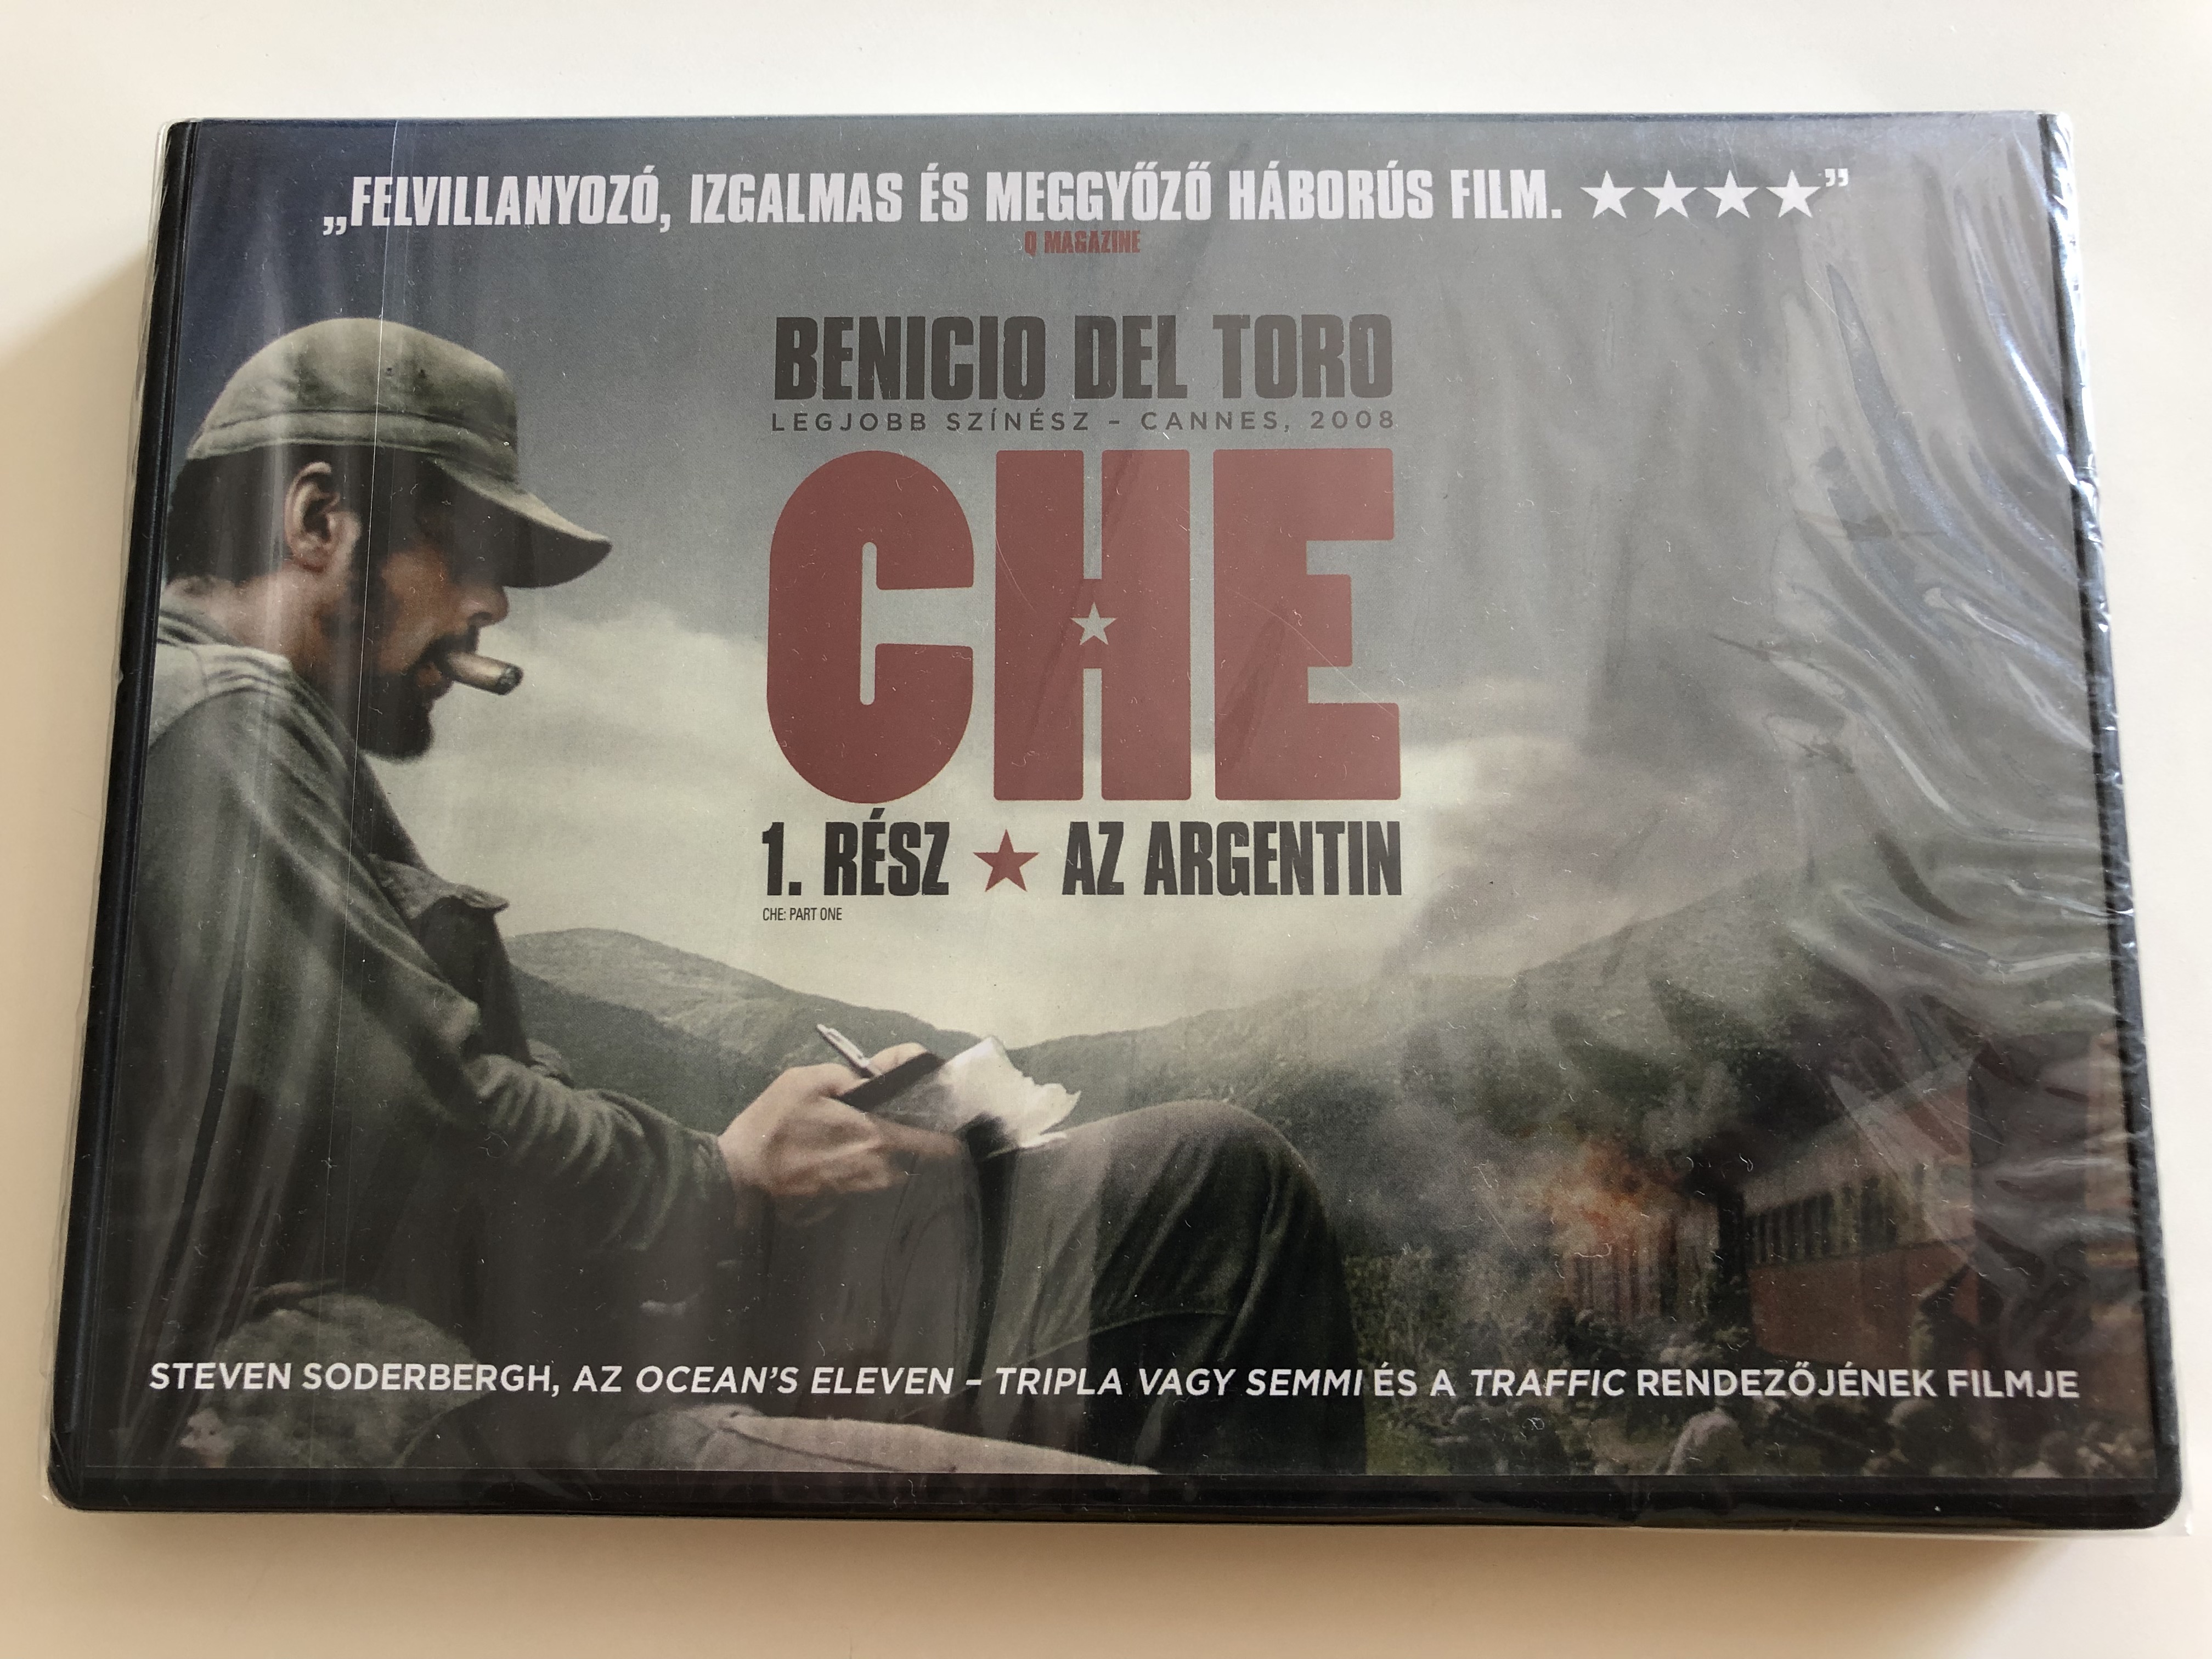 che-part-one-dvd-2008-che-az-argentin-directed-by-steven-soderbergh-starring-benicio-del-toro-demian-bichir-santiago-cabrera-vladimir-cruz-julia-ormond-1-.jpg